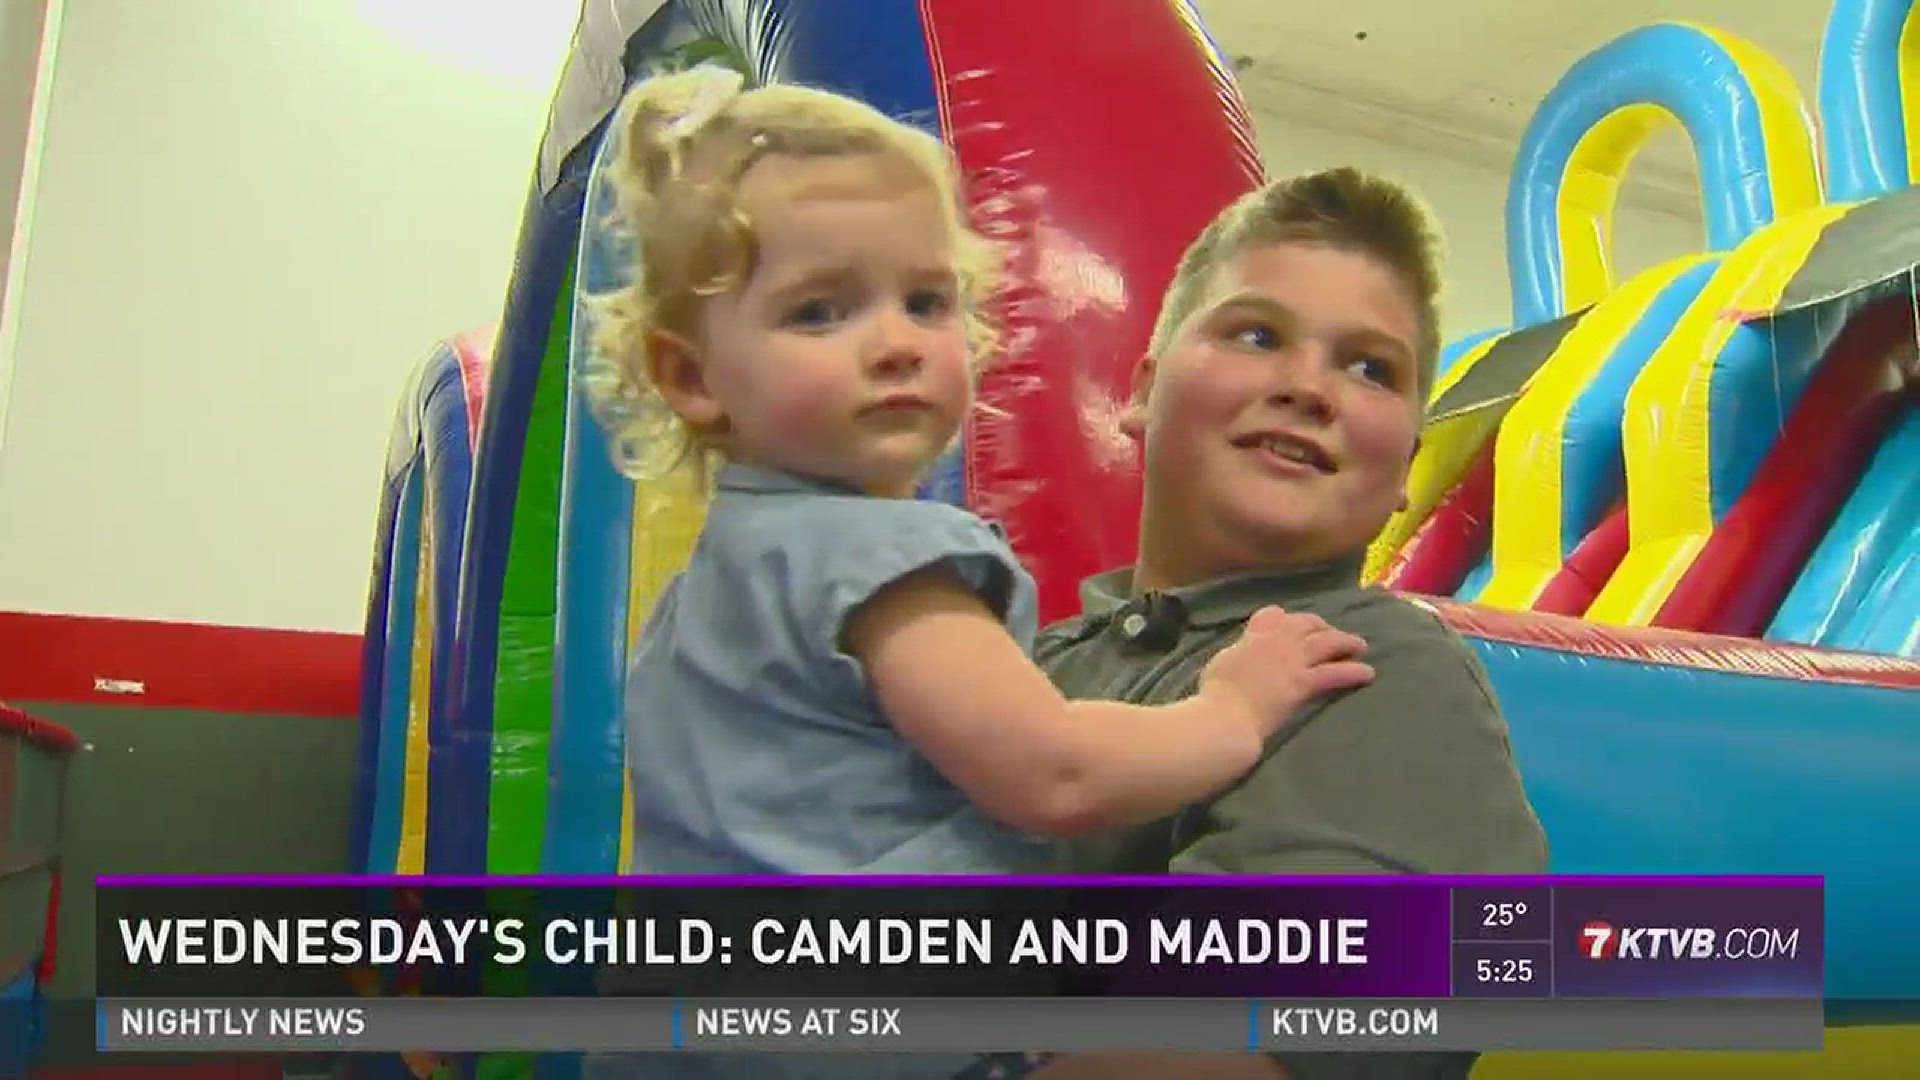 Wednesday's Child: Camden and Maddie